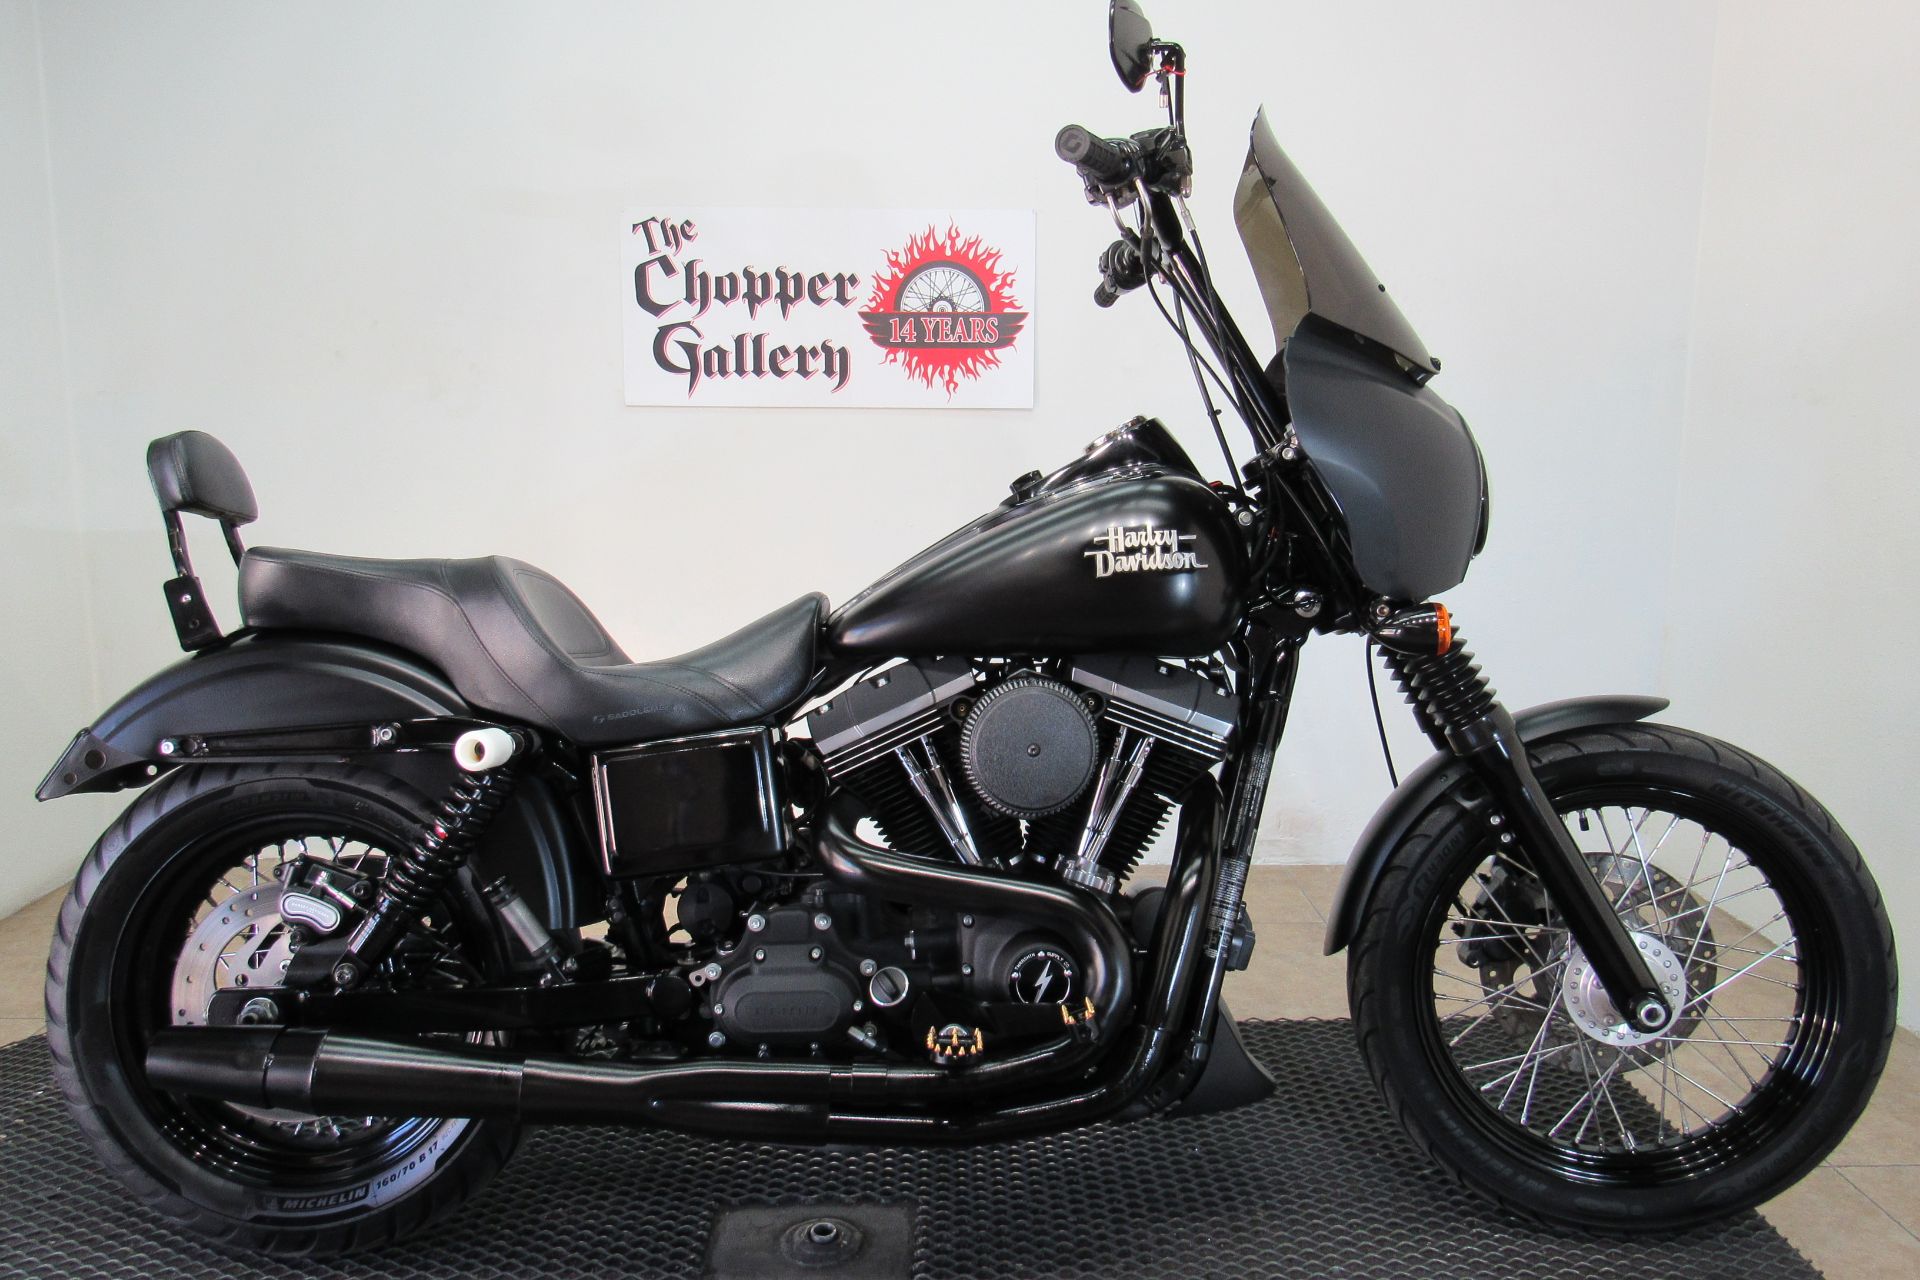 2013 Harley-Davidson Dyna® Street Bob® in Temecula, California - Photo 1